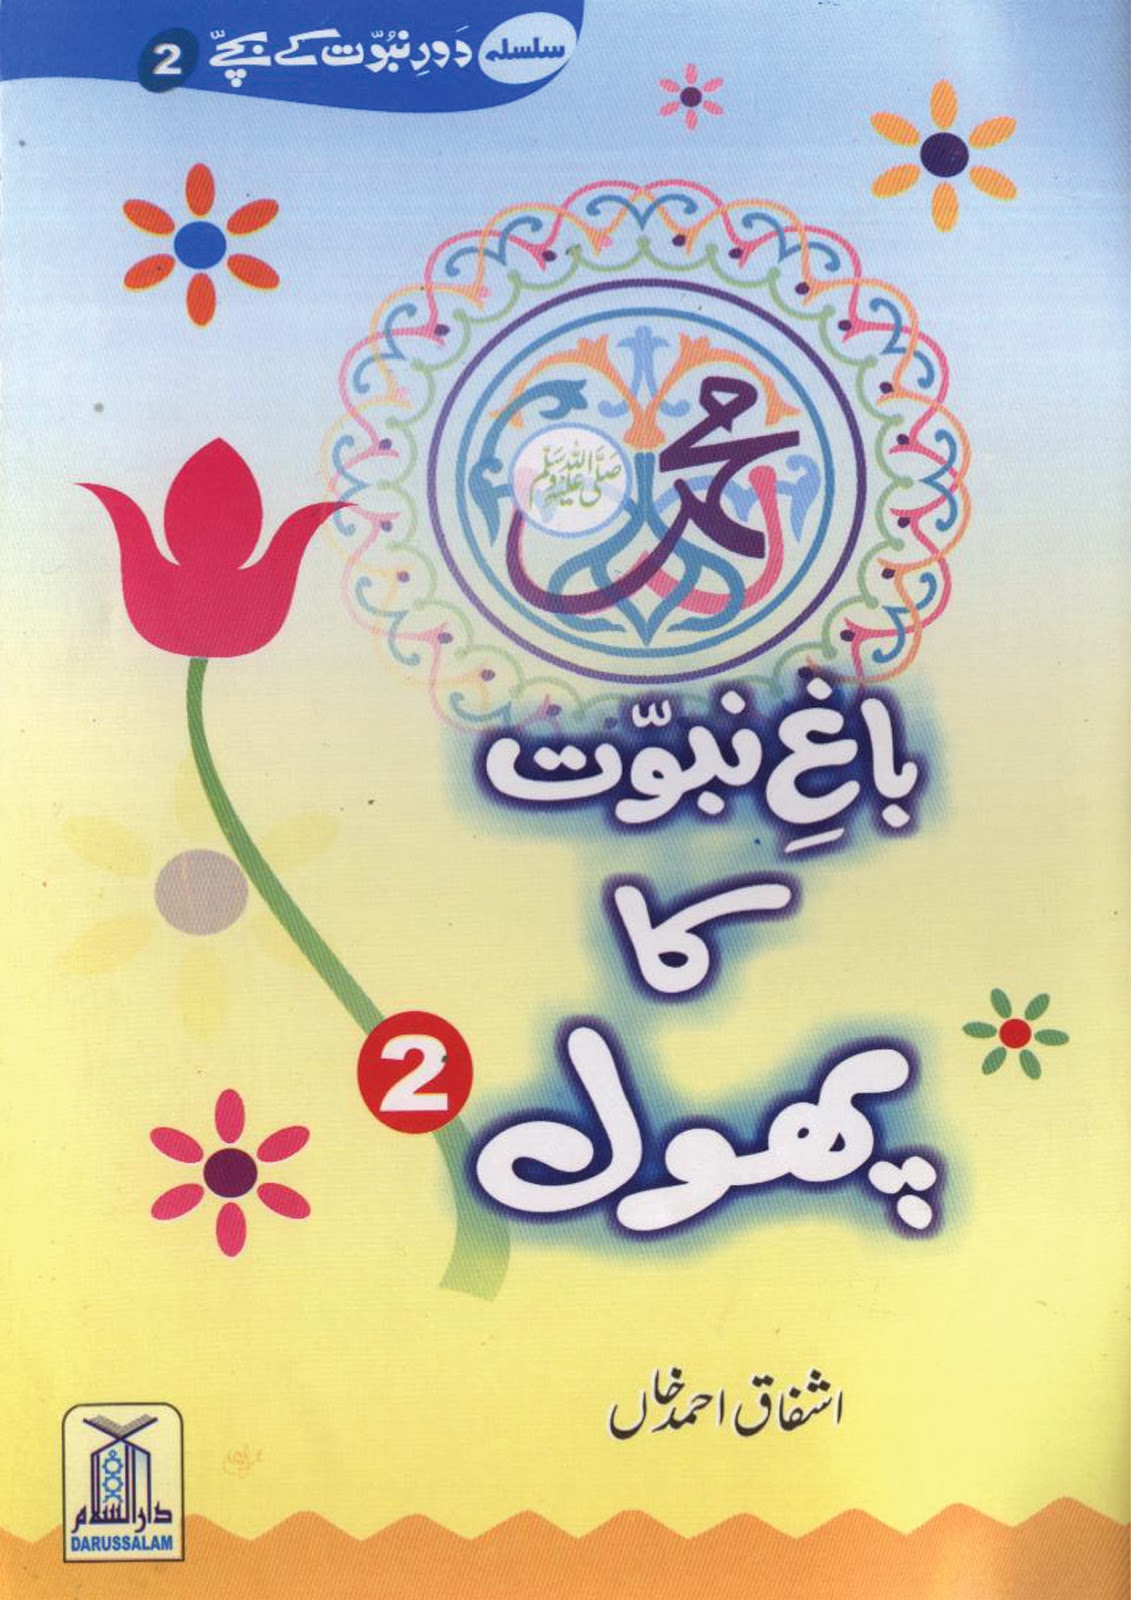 http://urduguru1.blogspot.com/2014/02/dory-nabuwat-ka-phool-2-hussain-bin-ali.html